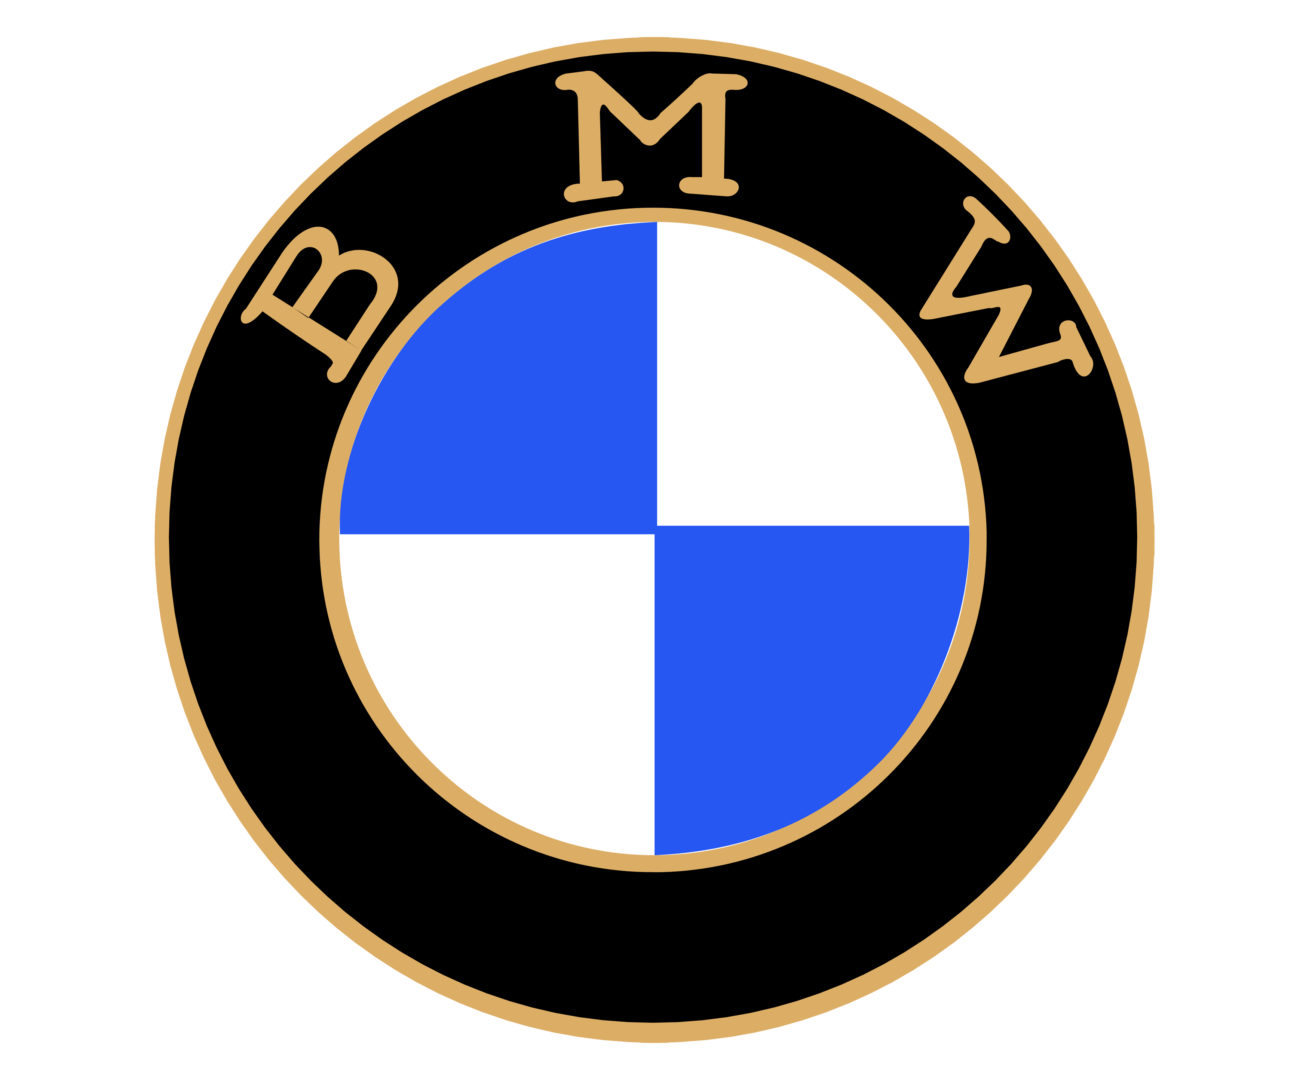 BMW Logo 1916